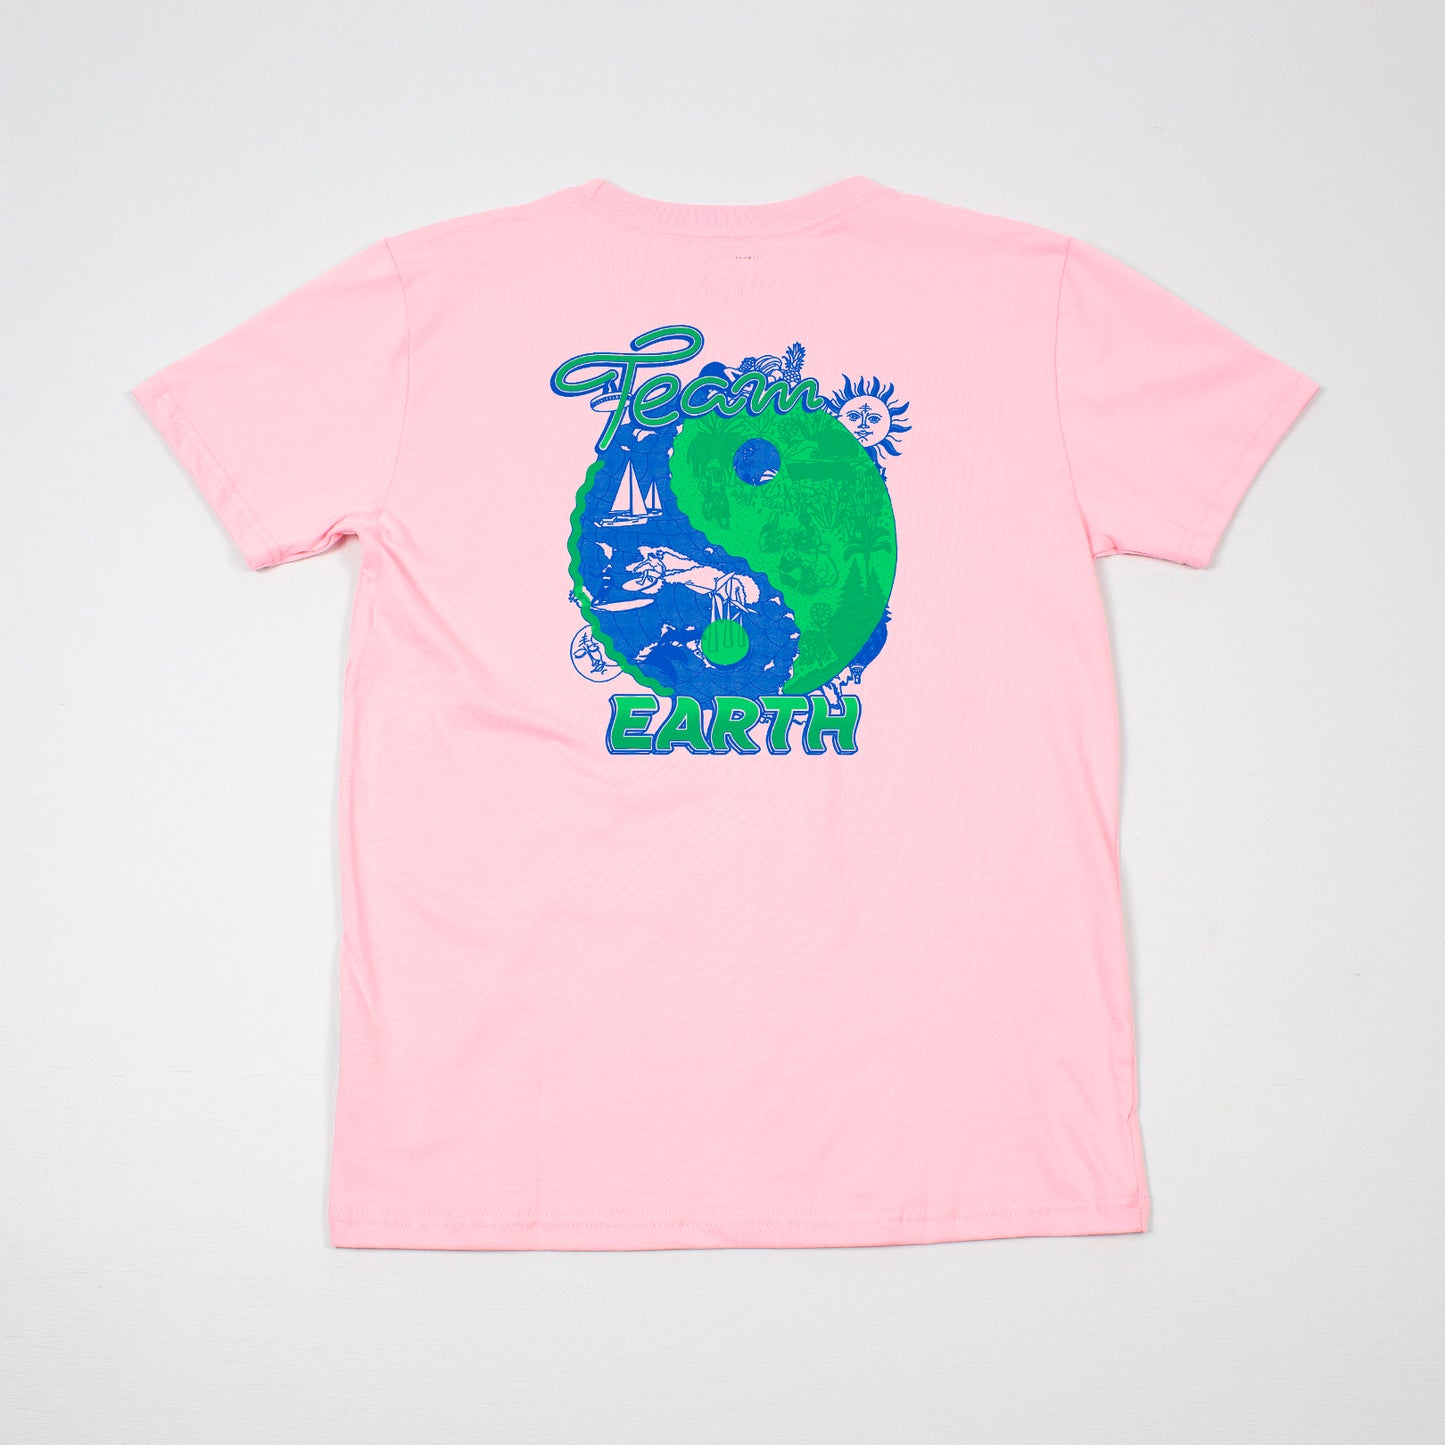 Team Earth pink tee